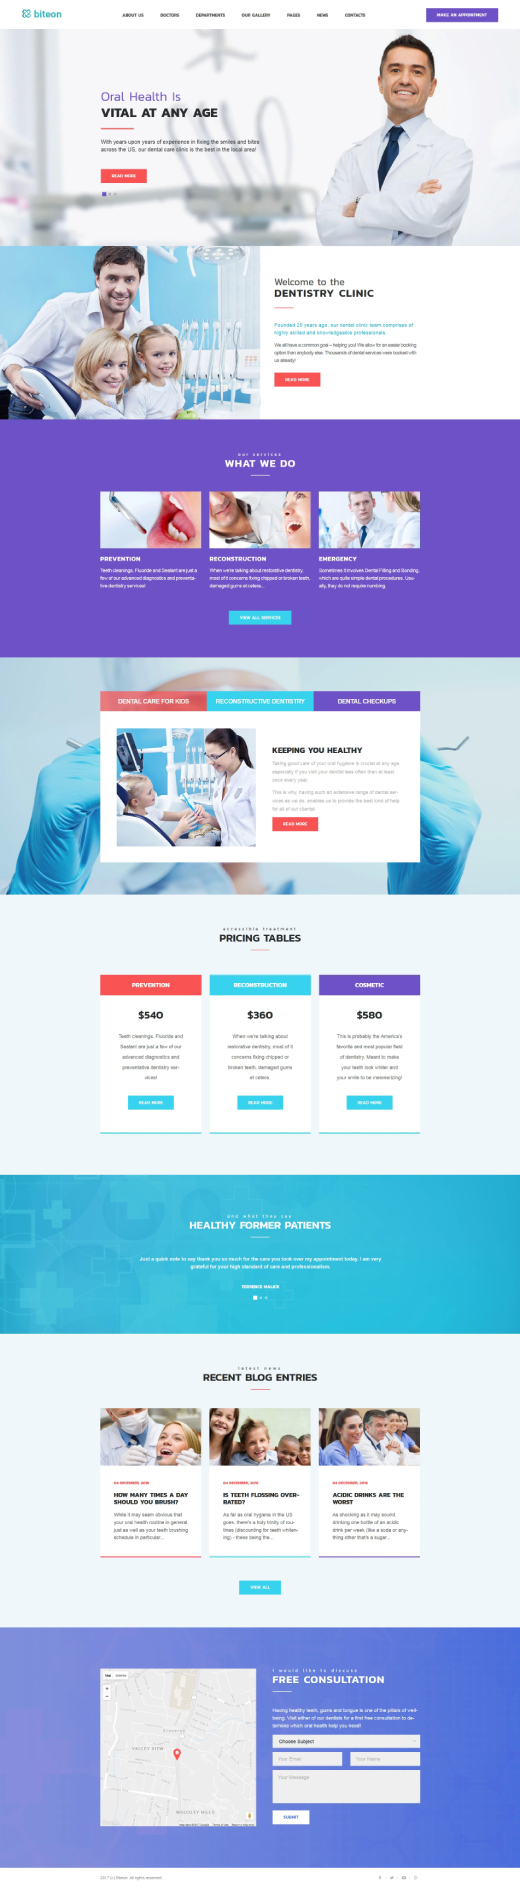  Biteon - Dentistry Clinic Responsive WordPress Theme